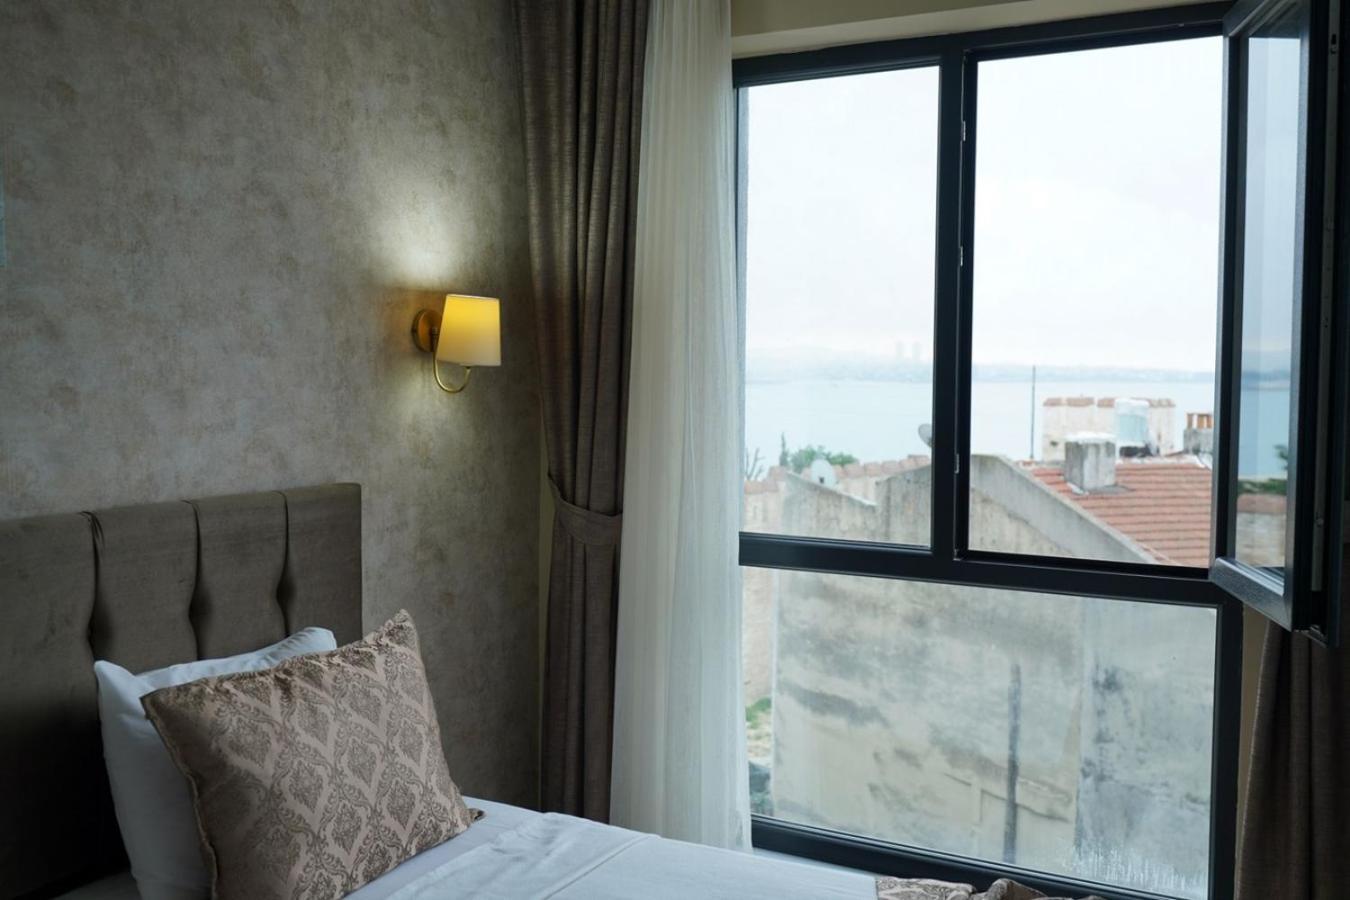 Sultan Hamit Hotel Κωνσταντινούπολη Εξωτερικό φωτογραφία